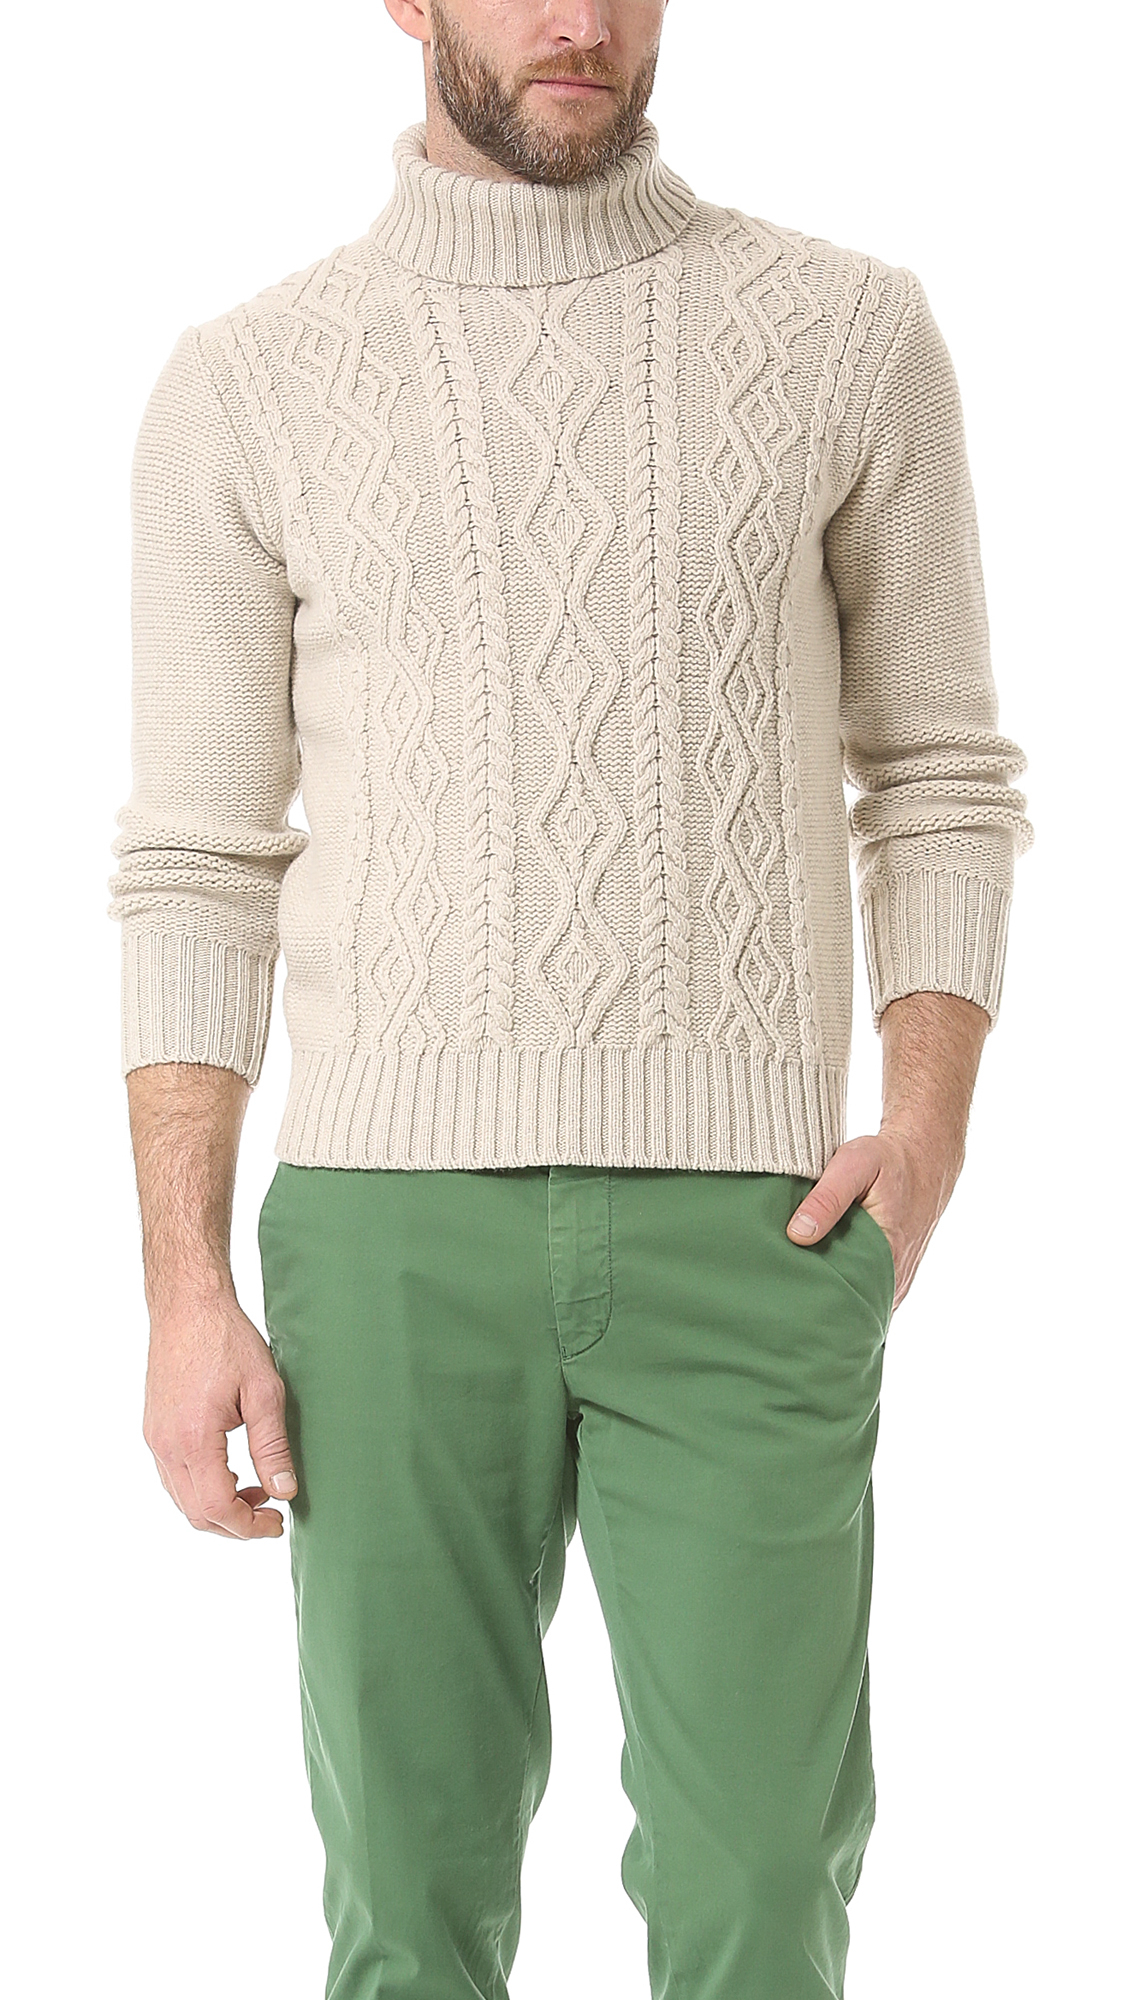 Inis Meáin Aran Turtleneck Sweater in Natural for Men - Lyst